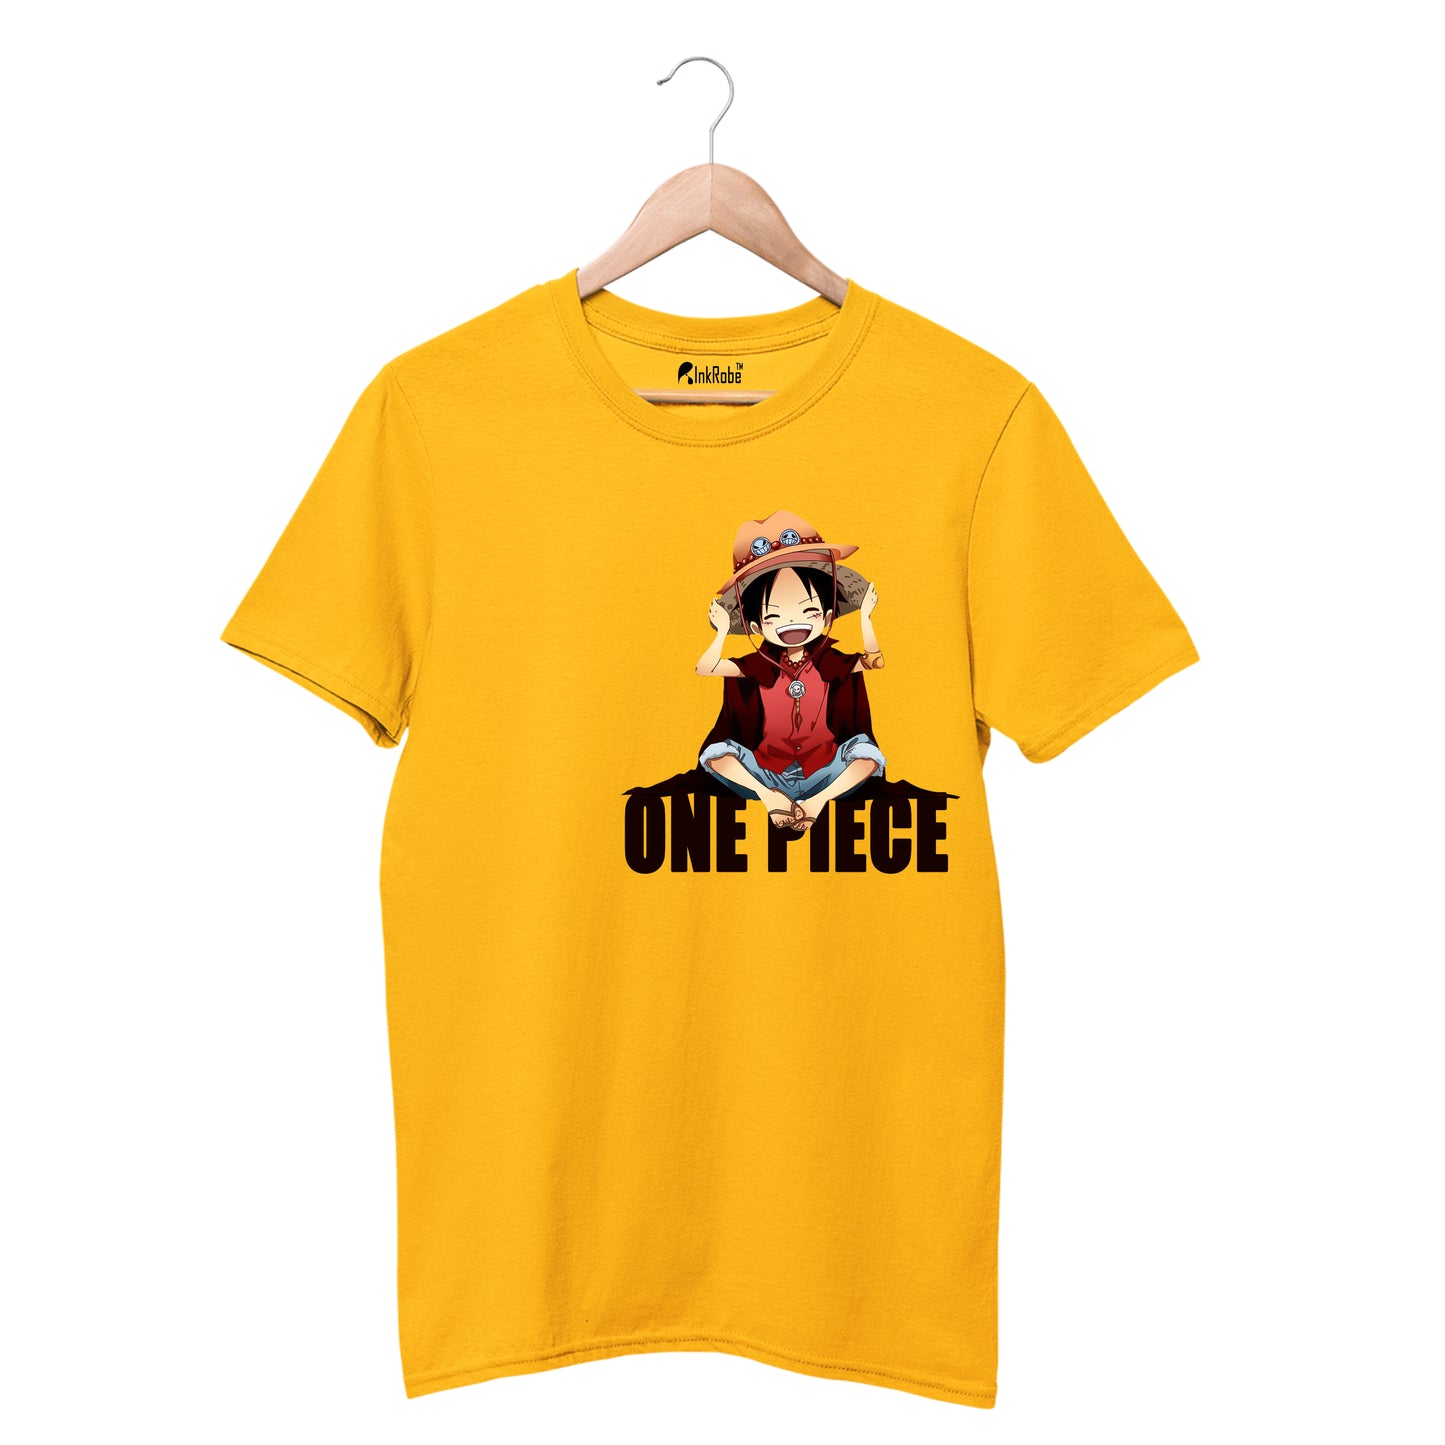 One Piece Luffy - Anime T-Shirt